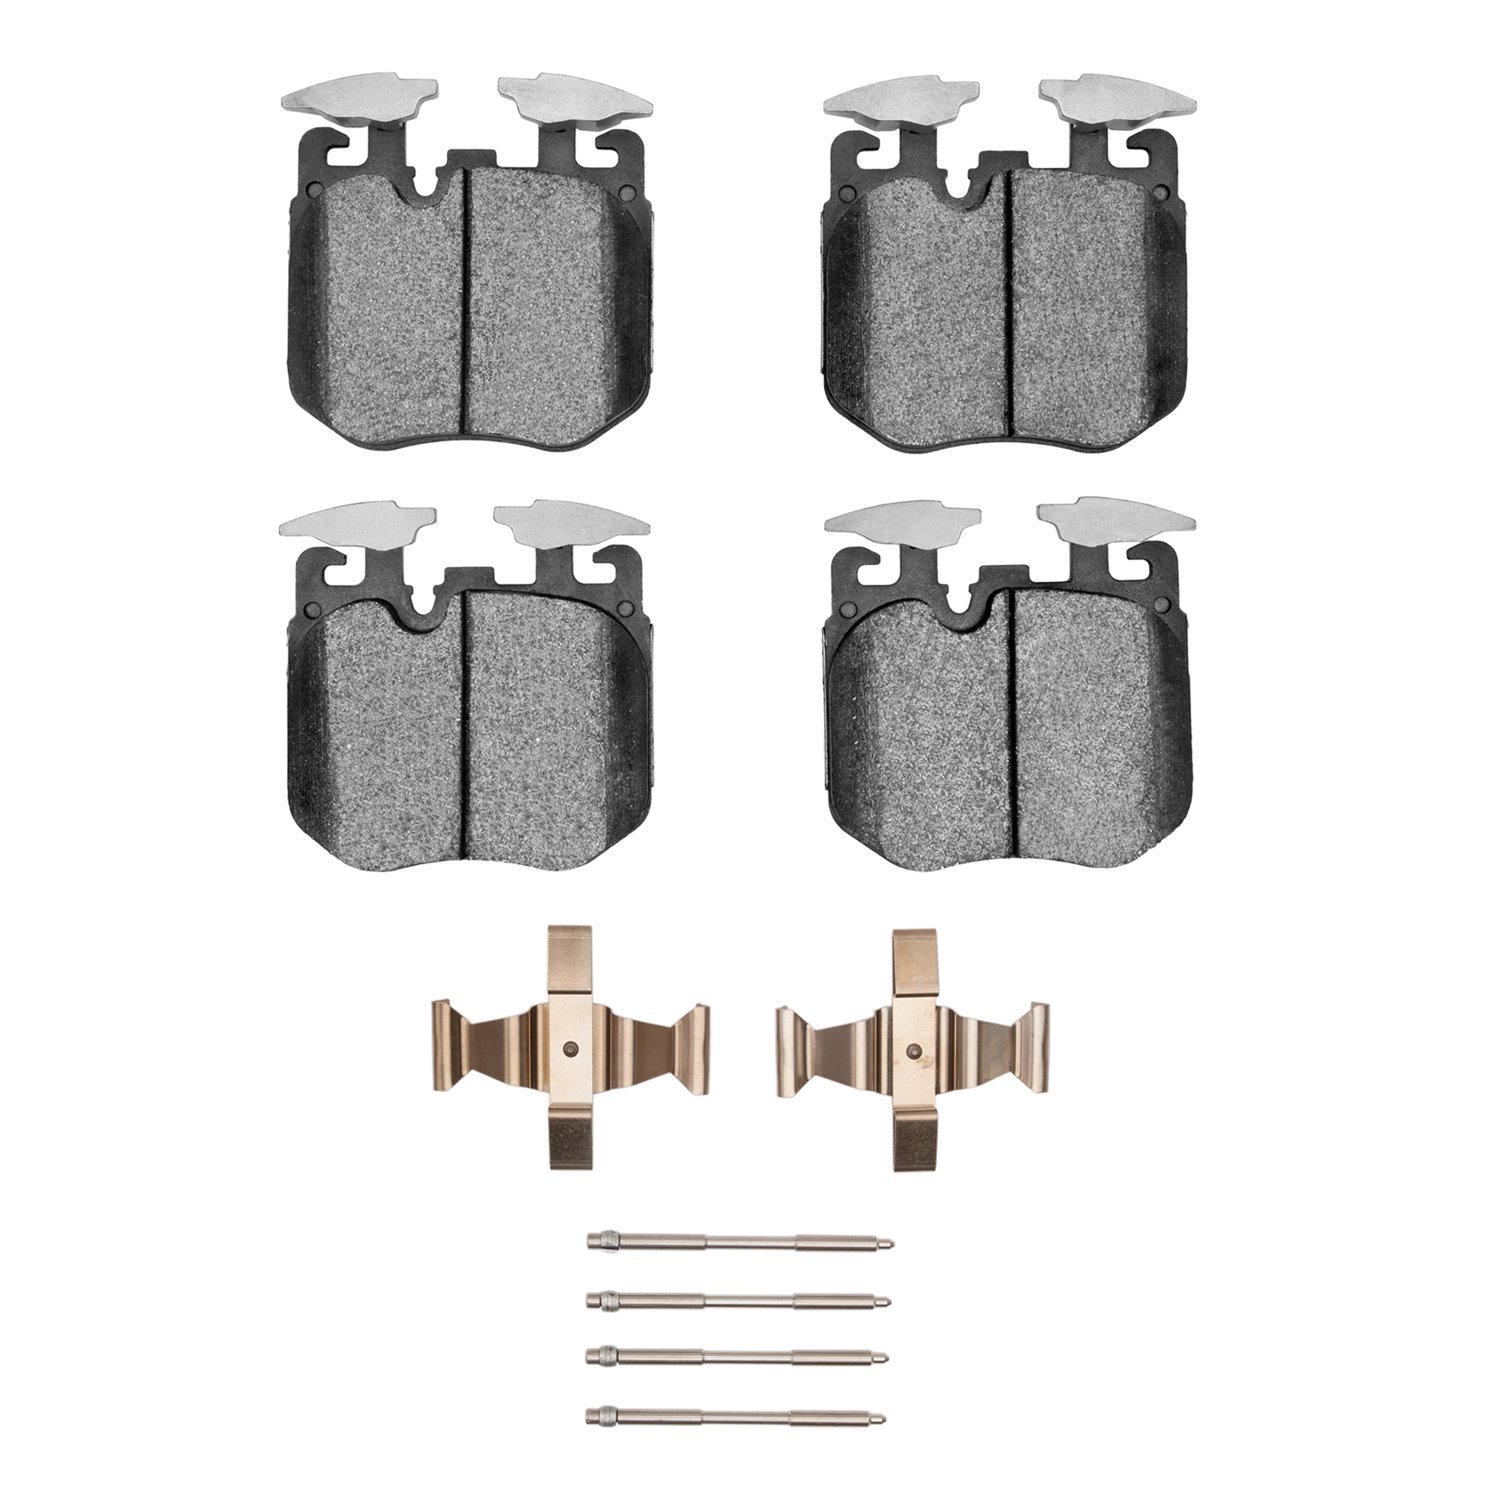 1310-1868-01 3000-Series Ceramic Brake Pads & Hardware Kit, Fits Select Multiple Makes/Models, Position: Front